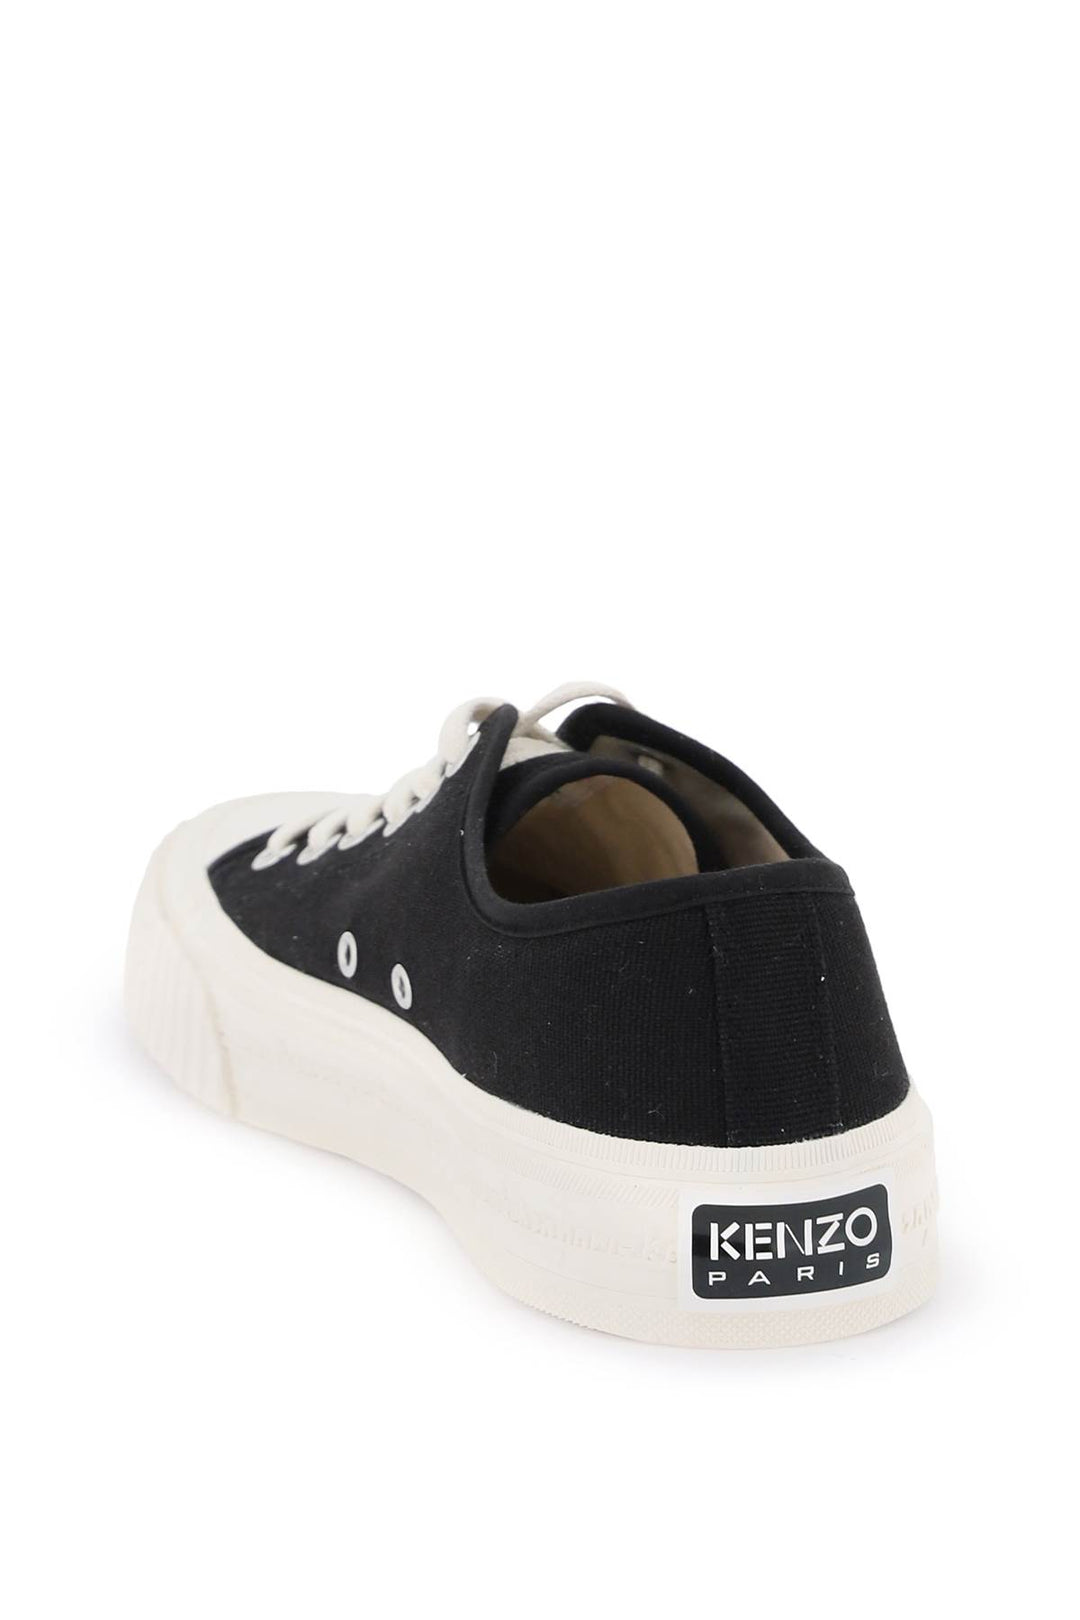 Kenzo Foxy Canvas Sneakers For Stylish   Nero